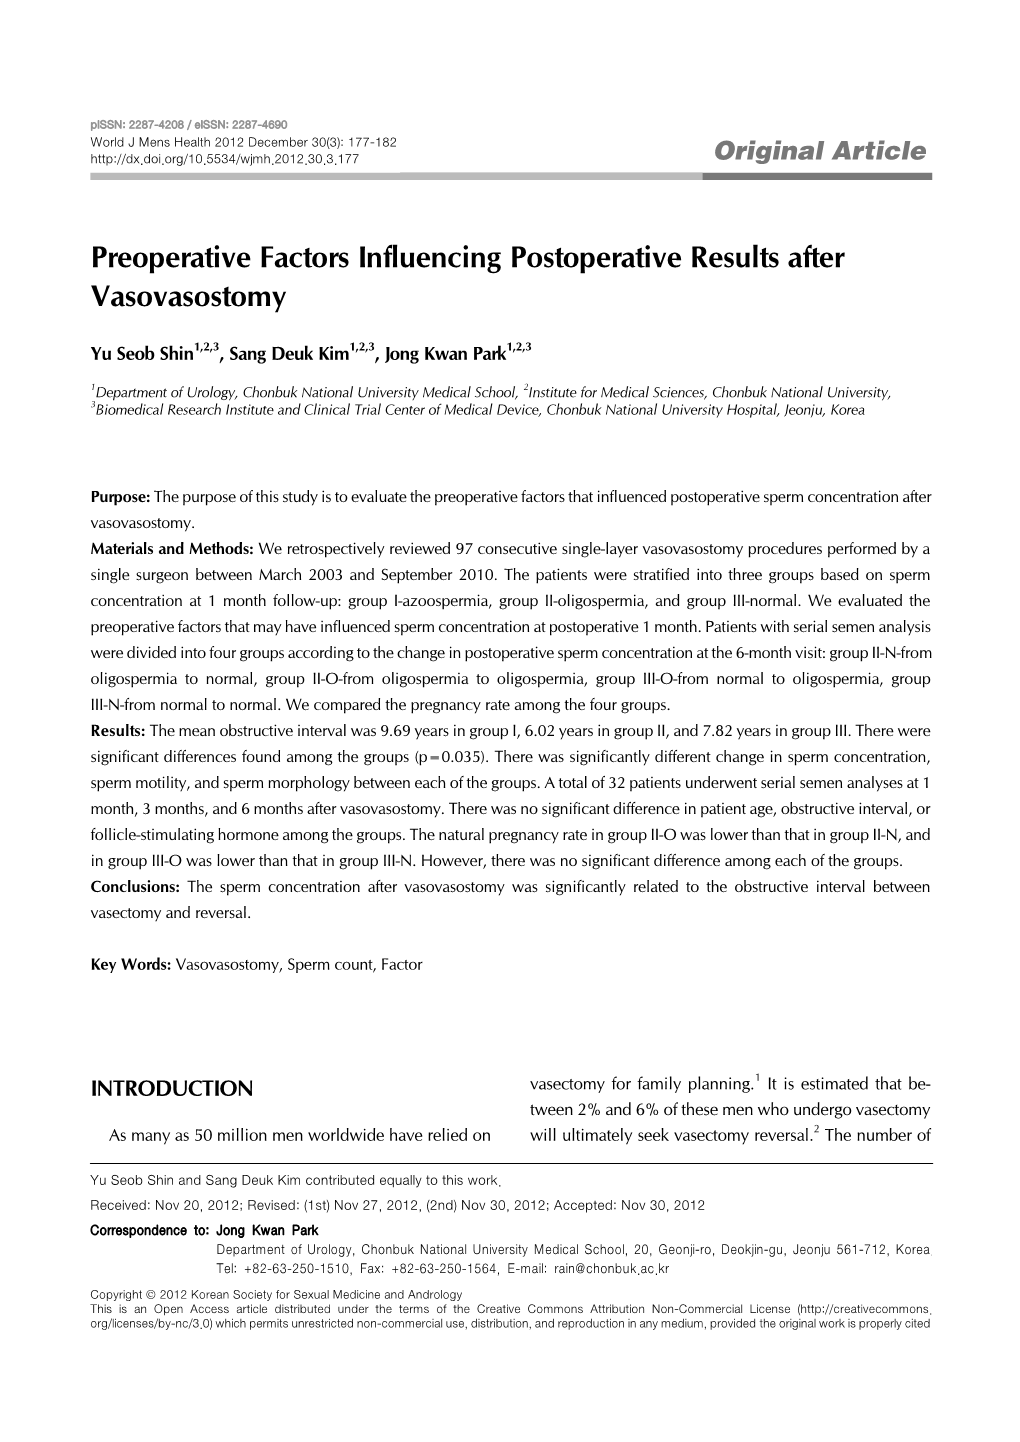 Preoperative Factors Influencing Postoperative Results After Vasovasostomy